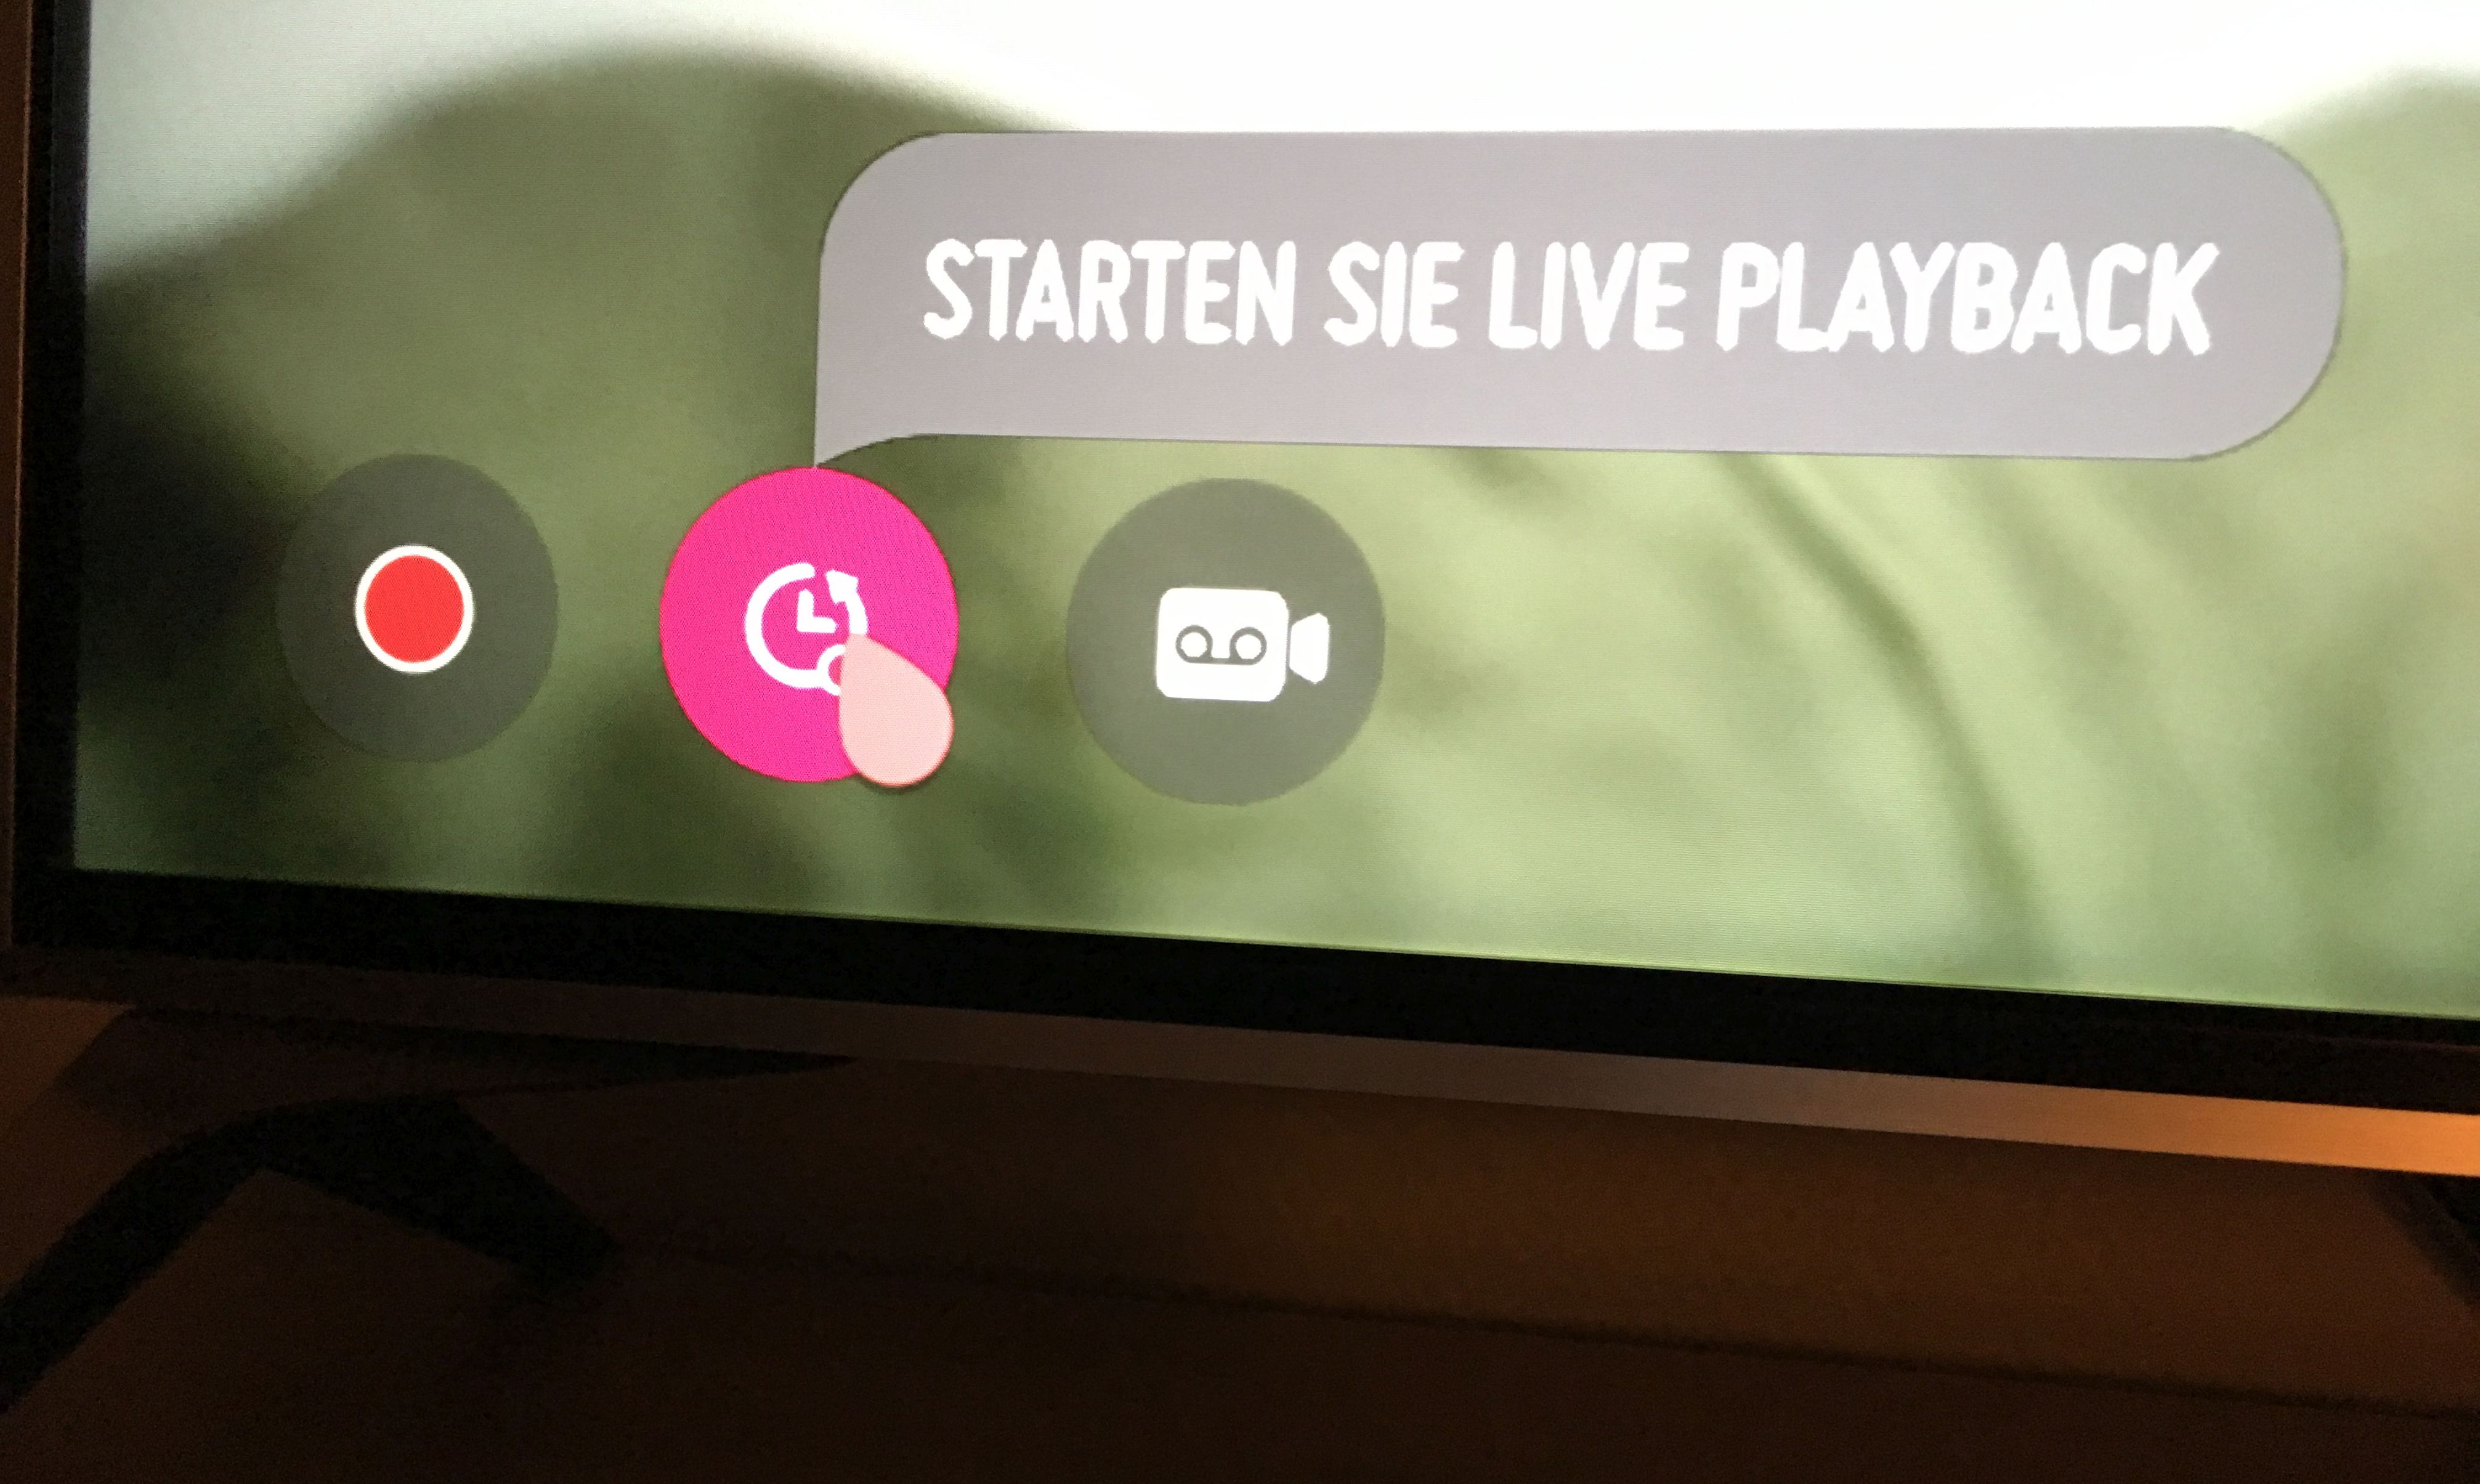 LG Live Playback WebOS 3.5 2017